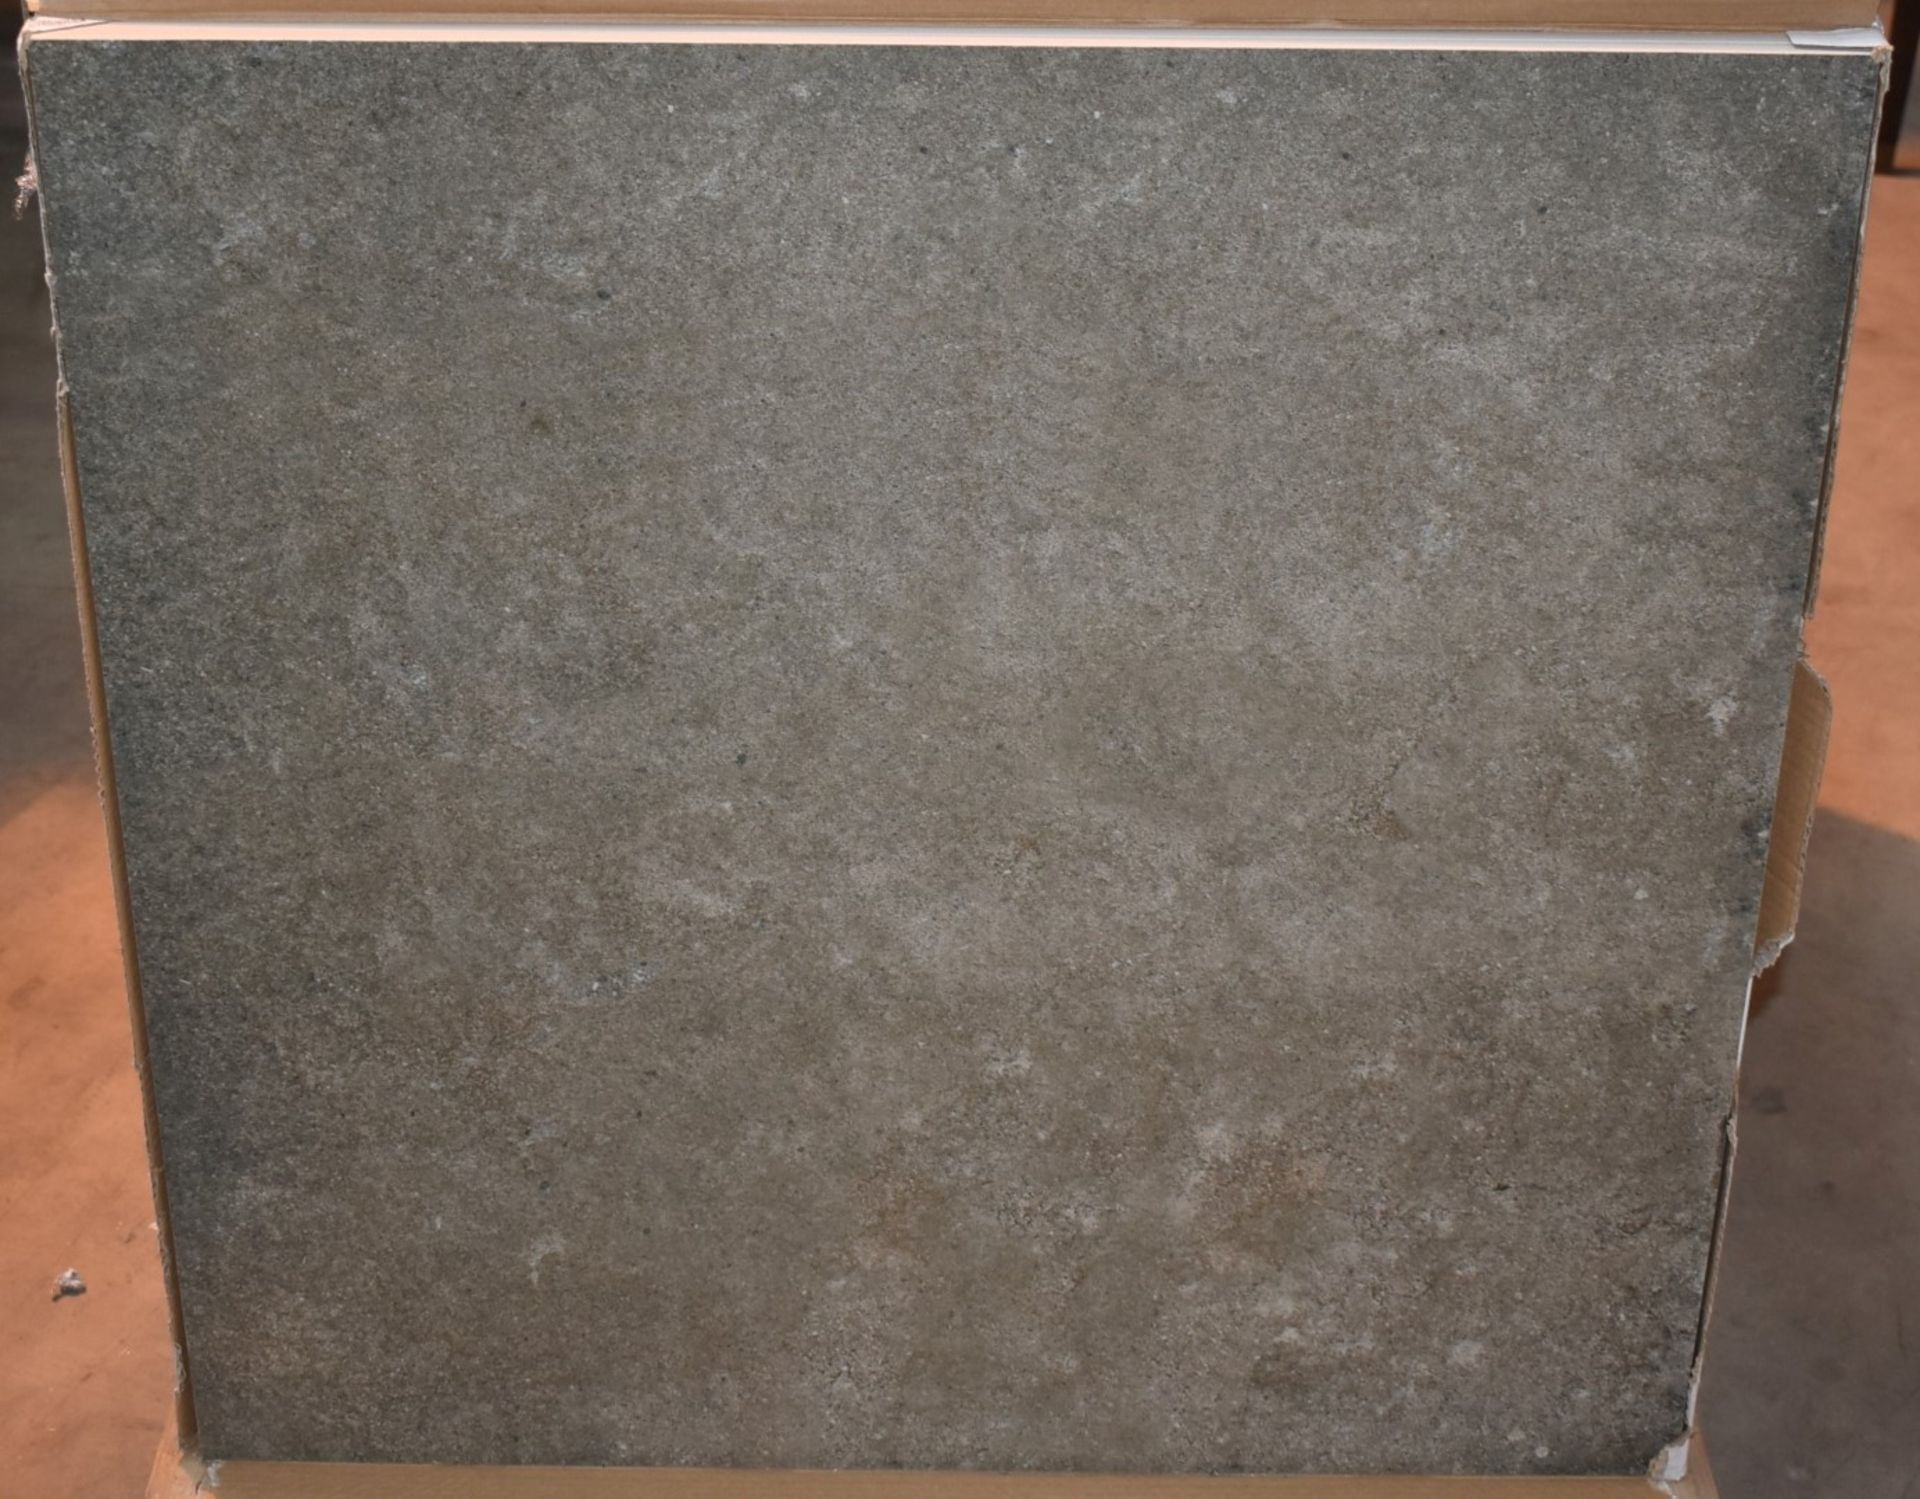 8 x Boxes of RAK Porcelain Tiles - Borgogna Stone Range - Grey Colour Gloss Finish - Size: 75x75cm - Image 5 of 6